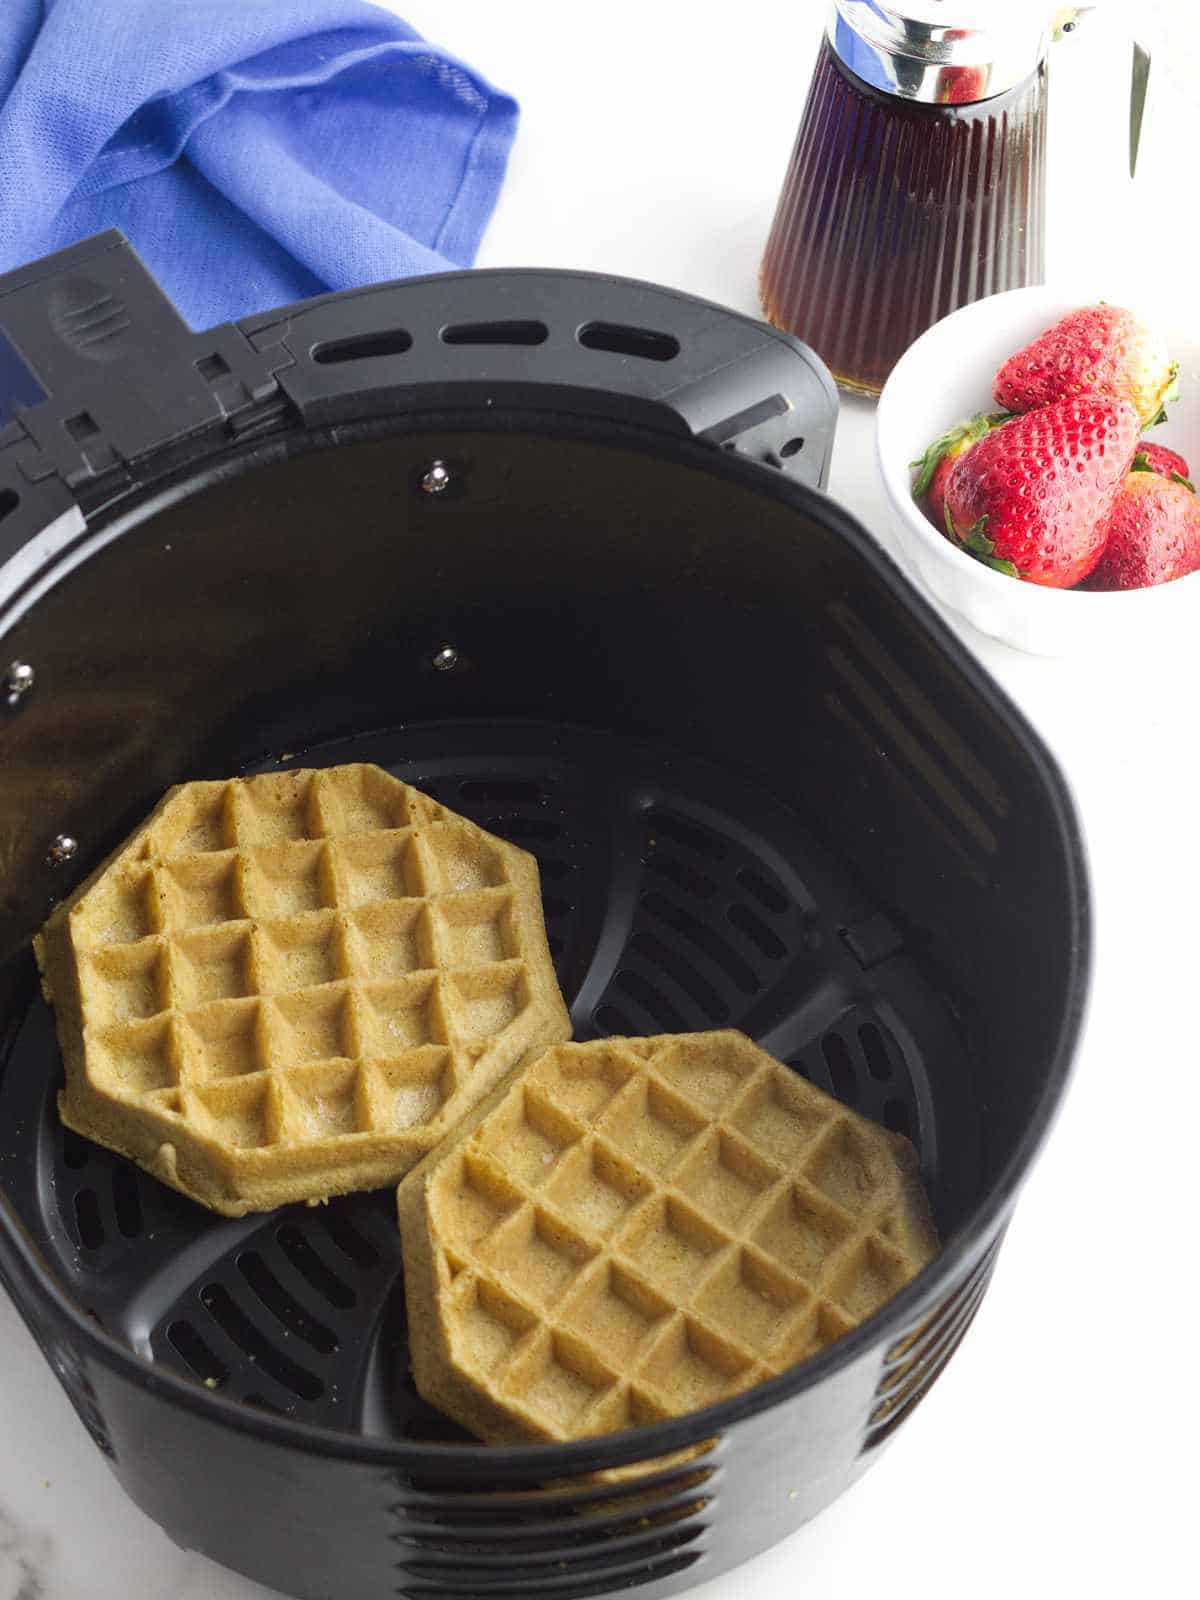 frozen waffles inside a air fryer basket.